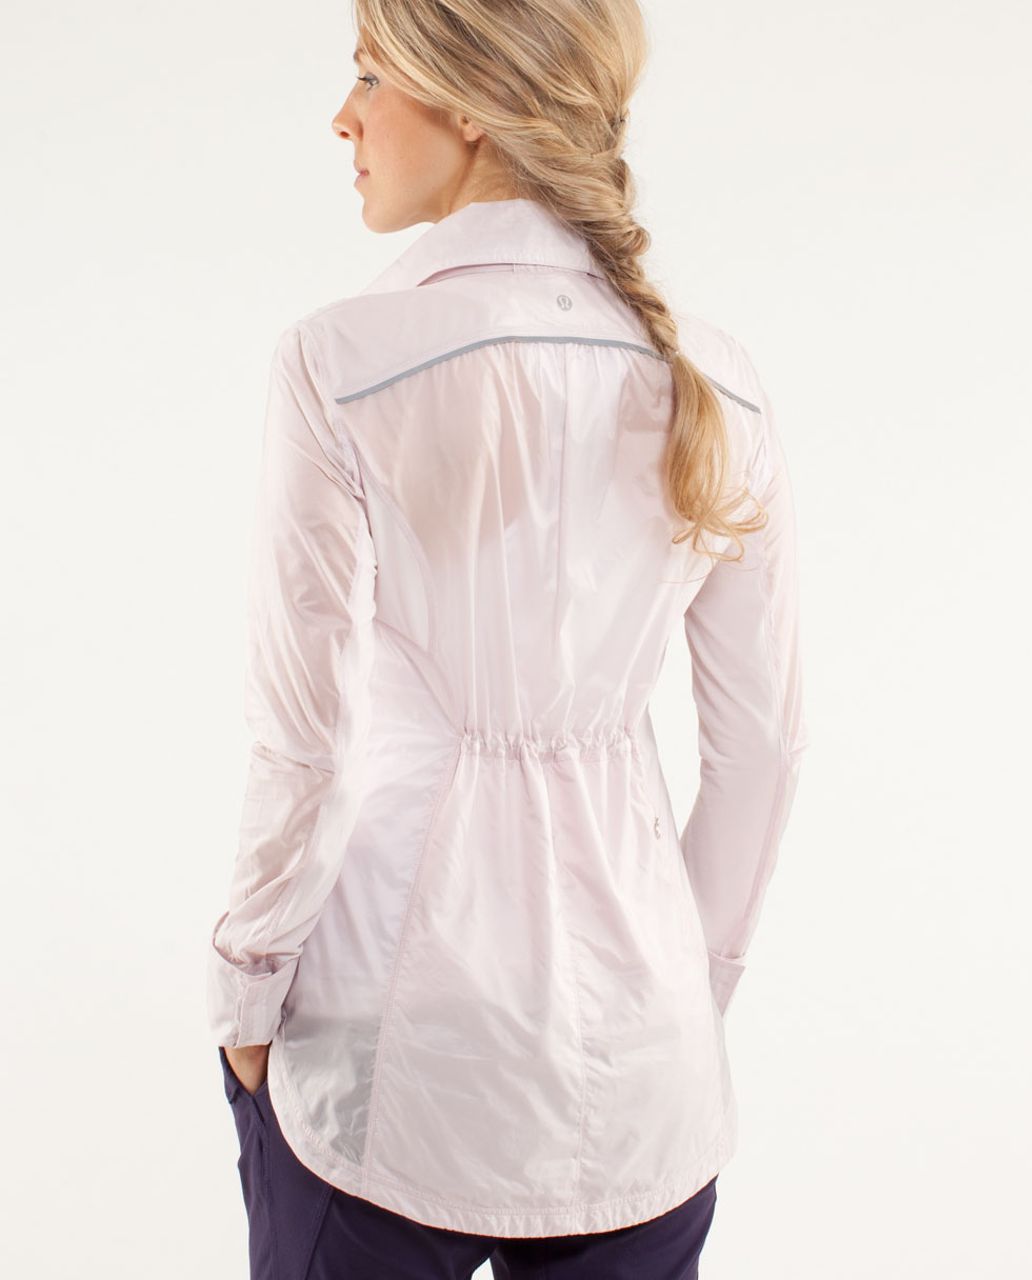 Lululemon Pedal Power Wind Shirt - Neutral Blush